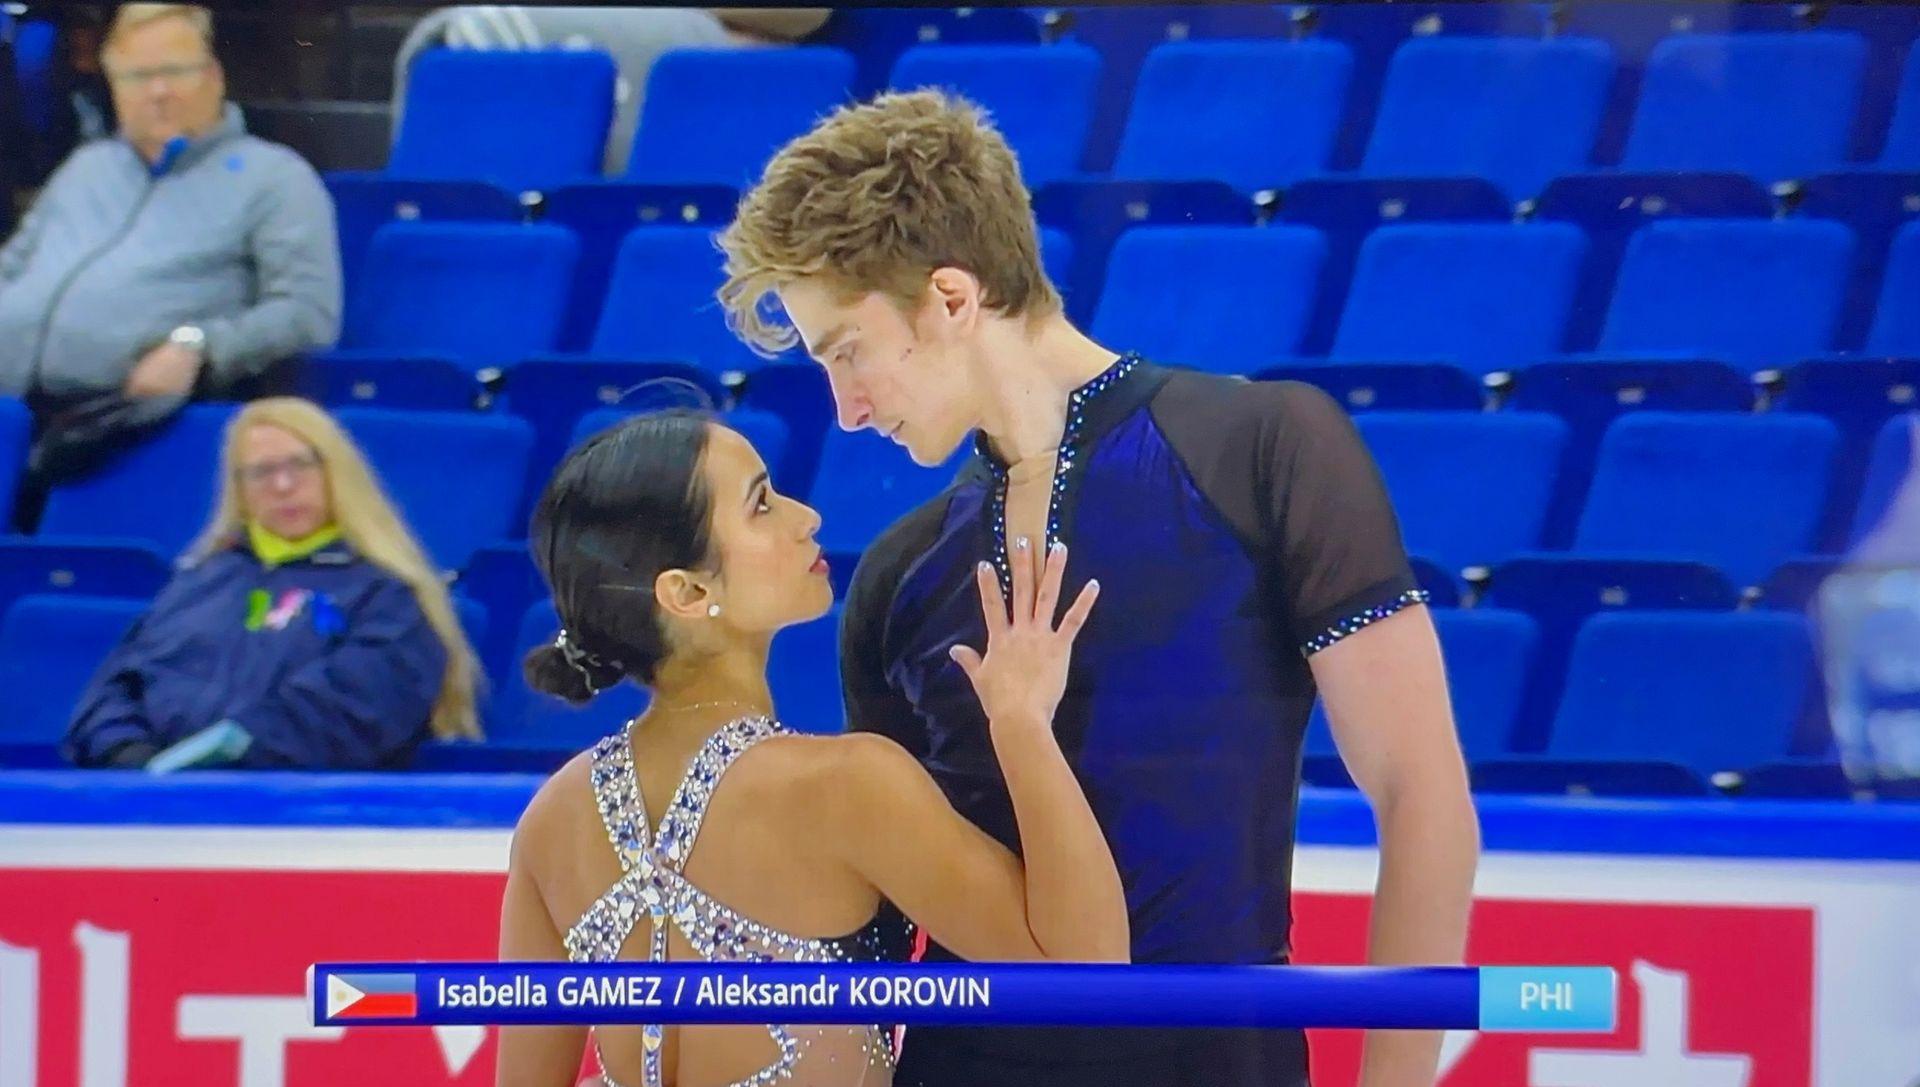 Isabella & Alexander's Impressive Performance on the Ice.